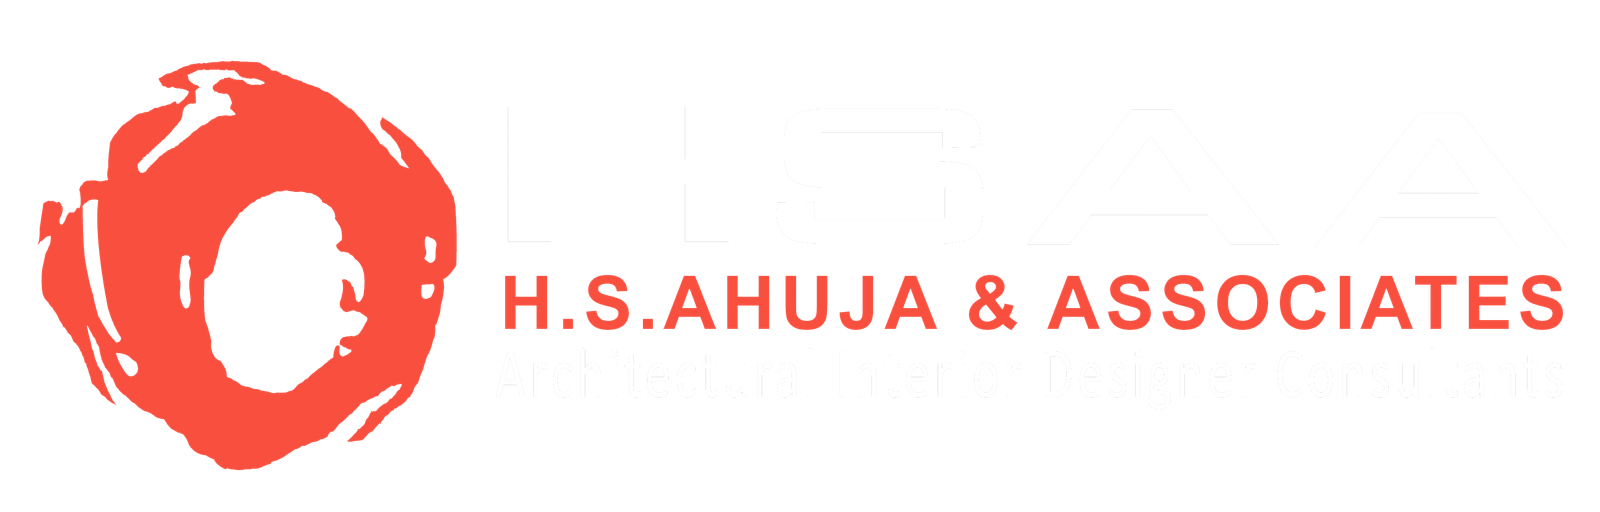 best-interior-designer-in-delhi-company-hsaa-logo